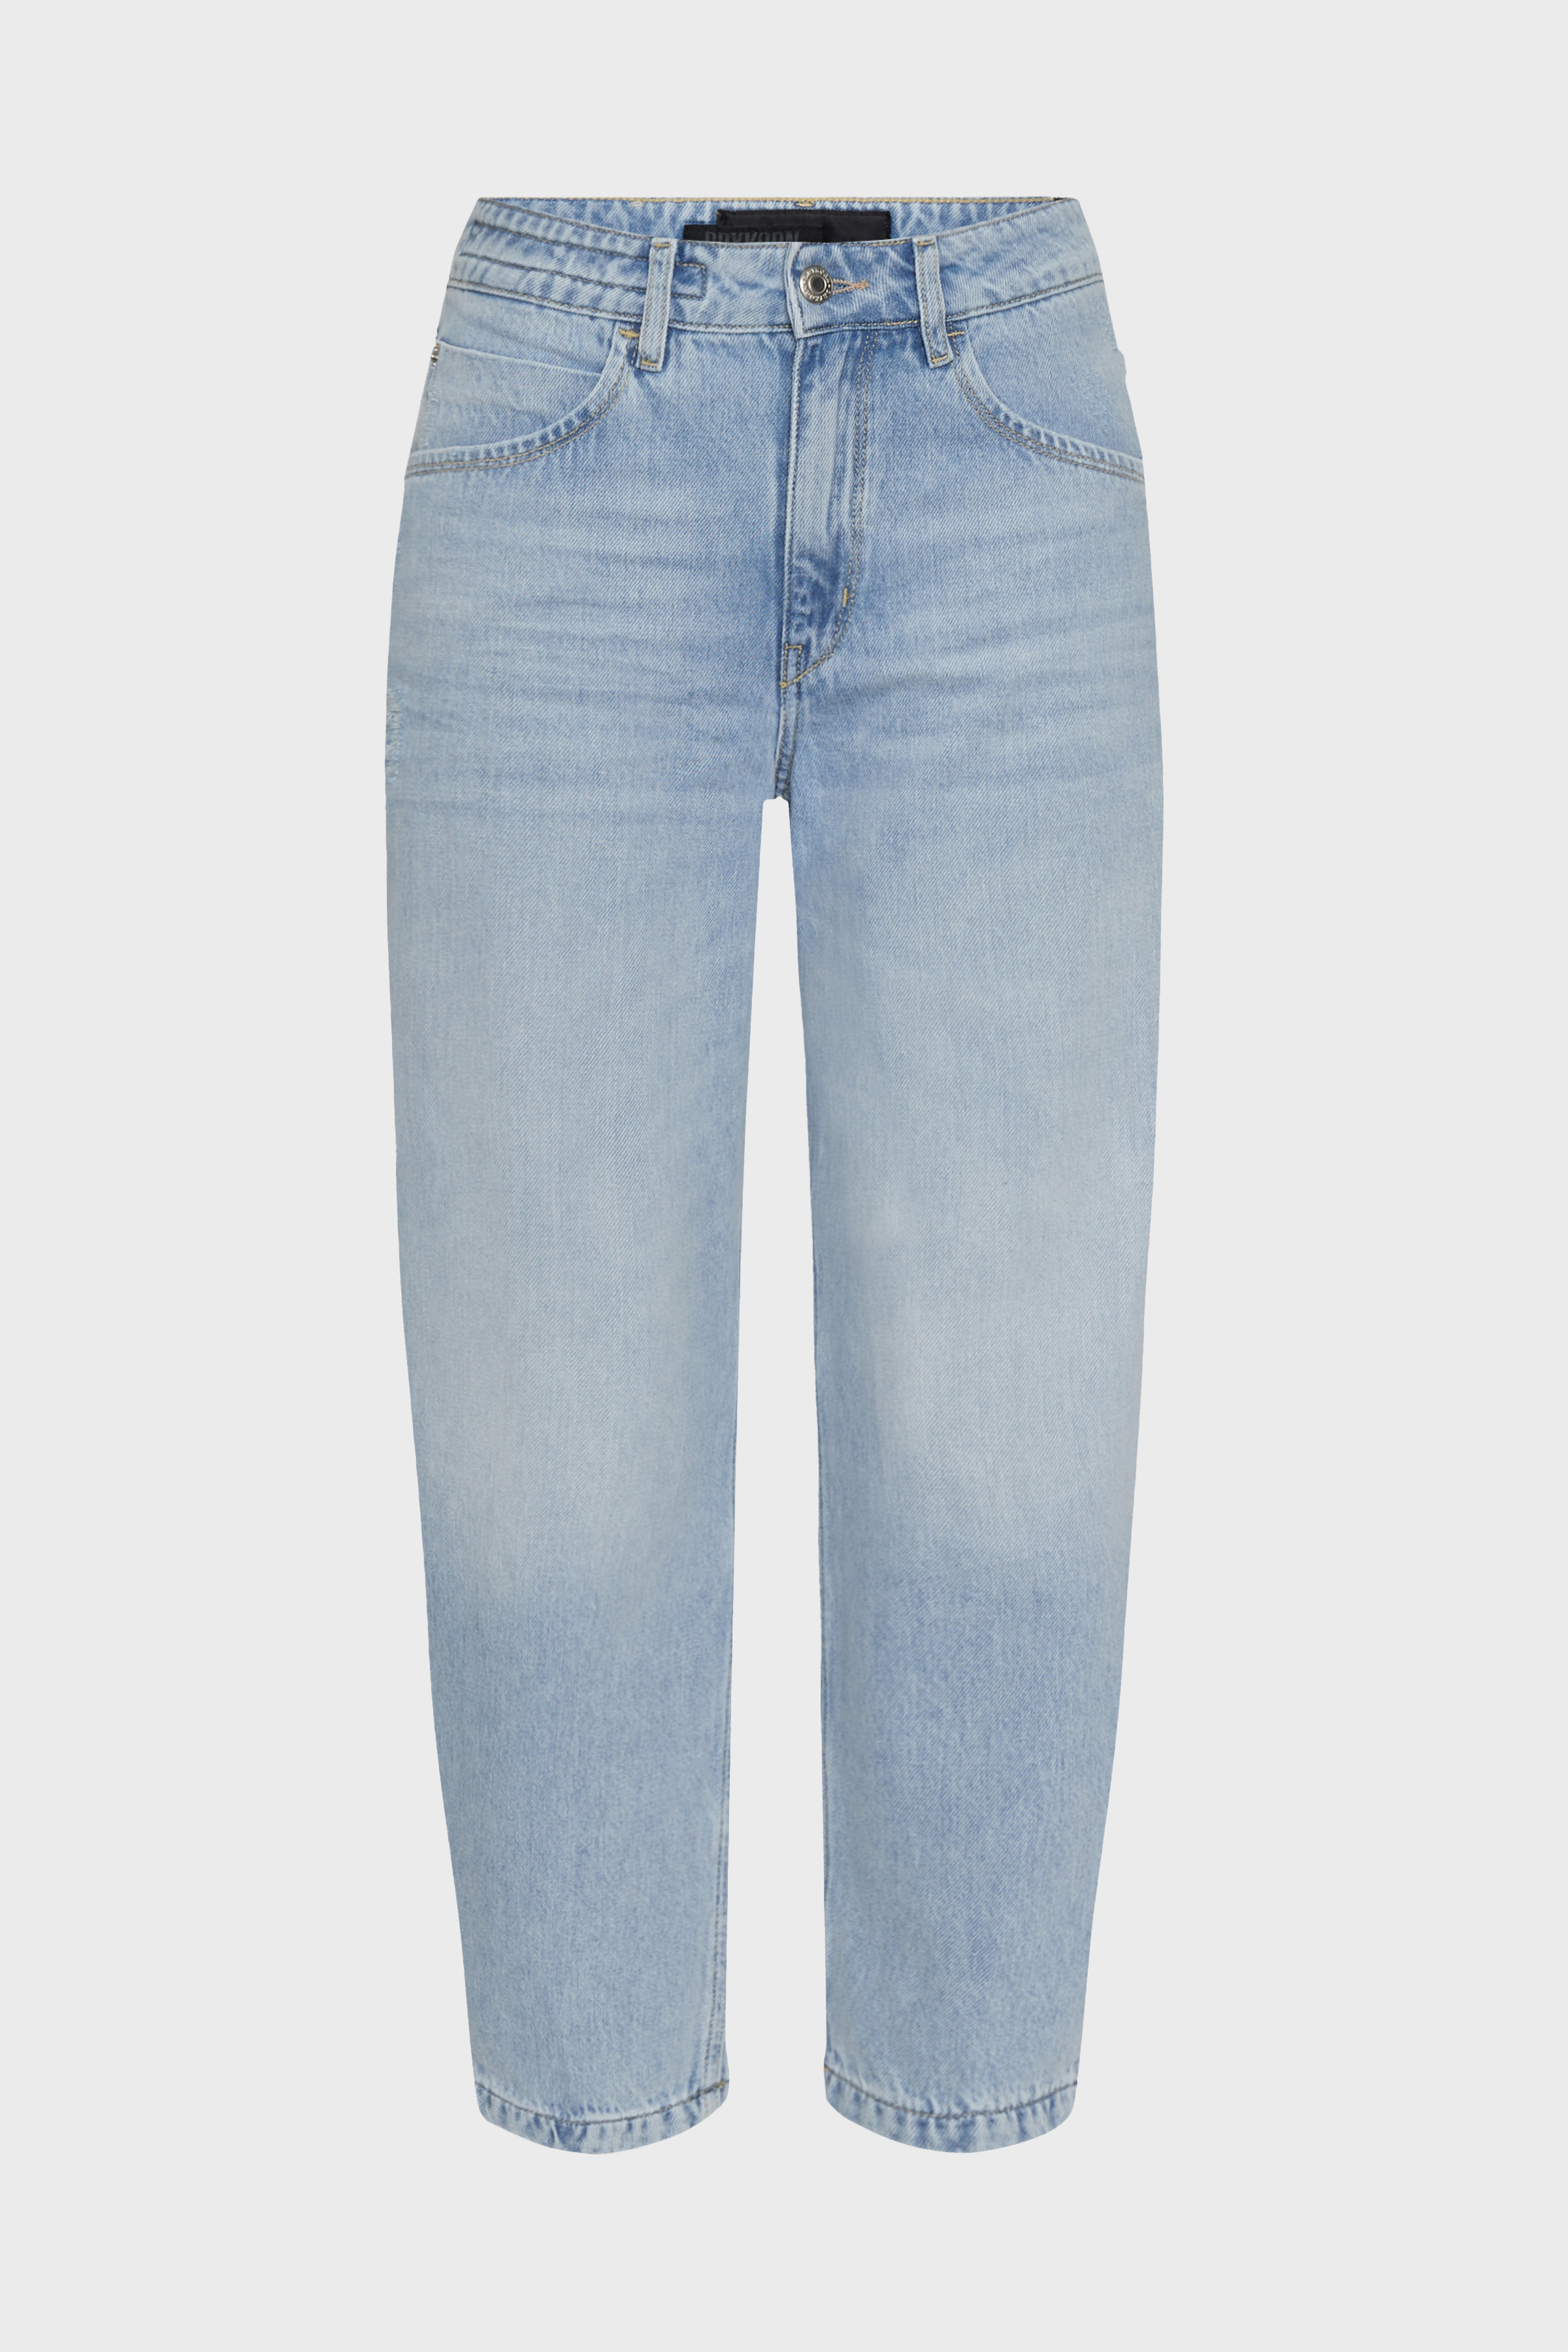 DRYKORN 260089 SHELTER 10 Damen 7/8-Jeans mit Barrel-Leg Hellblau